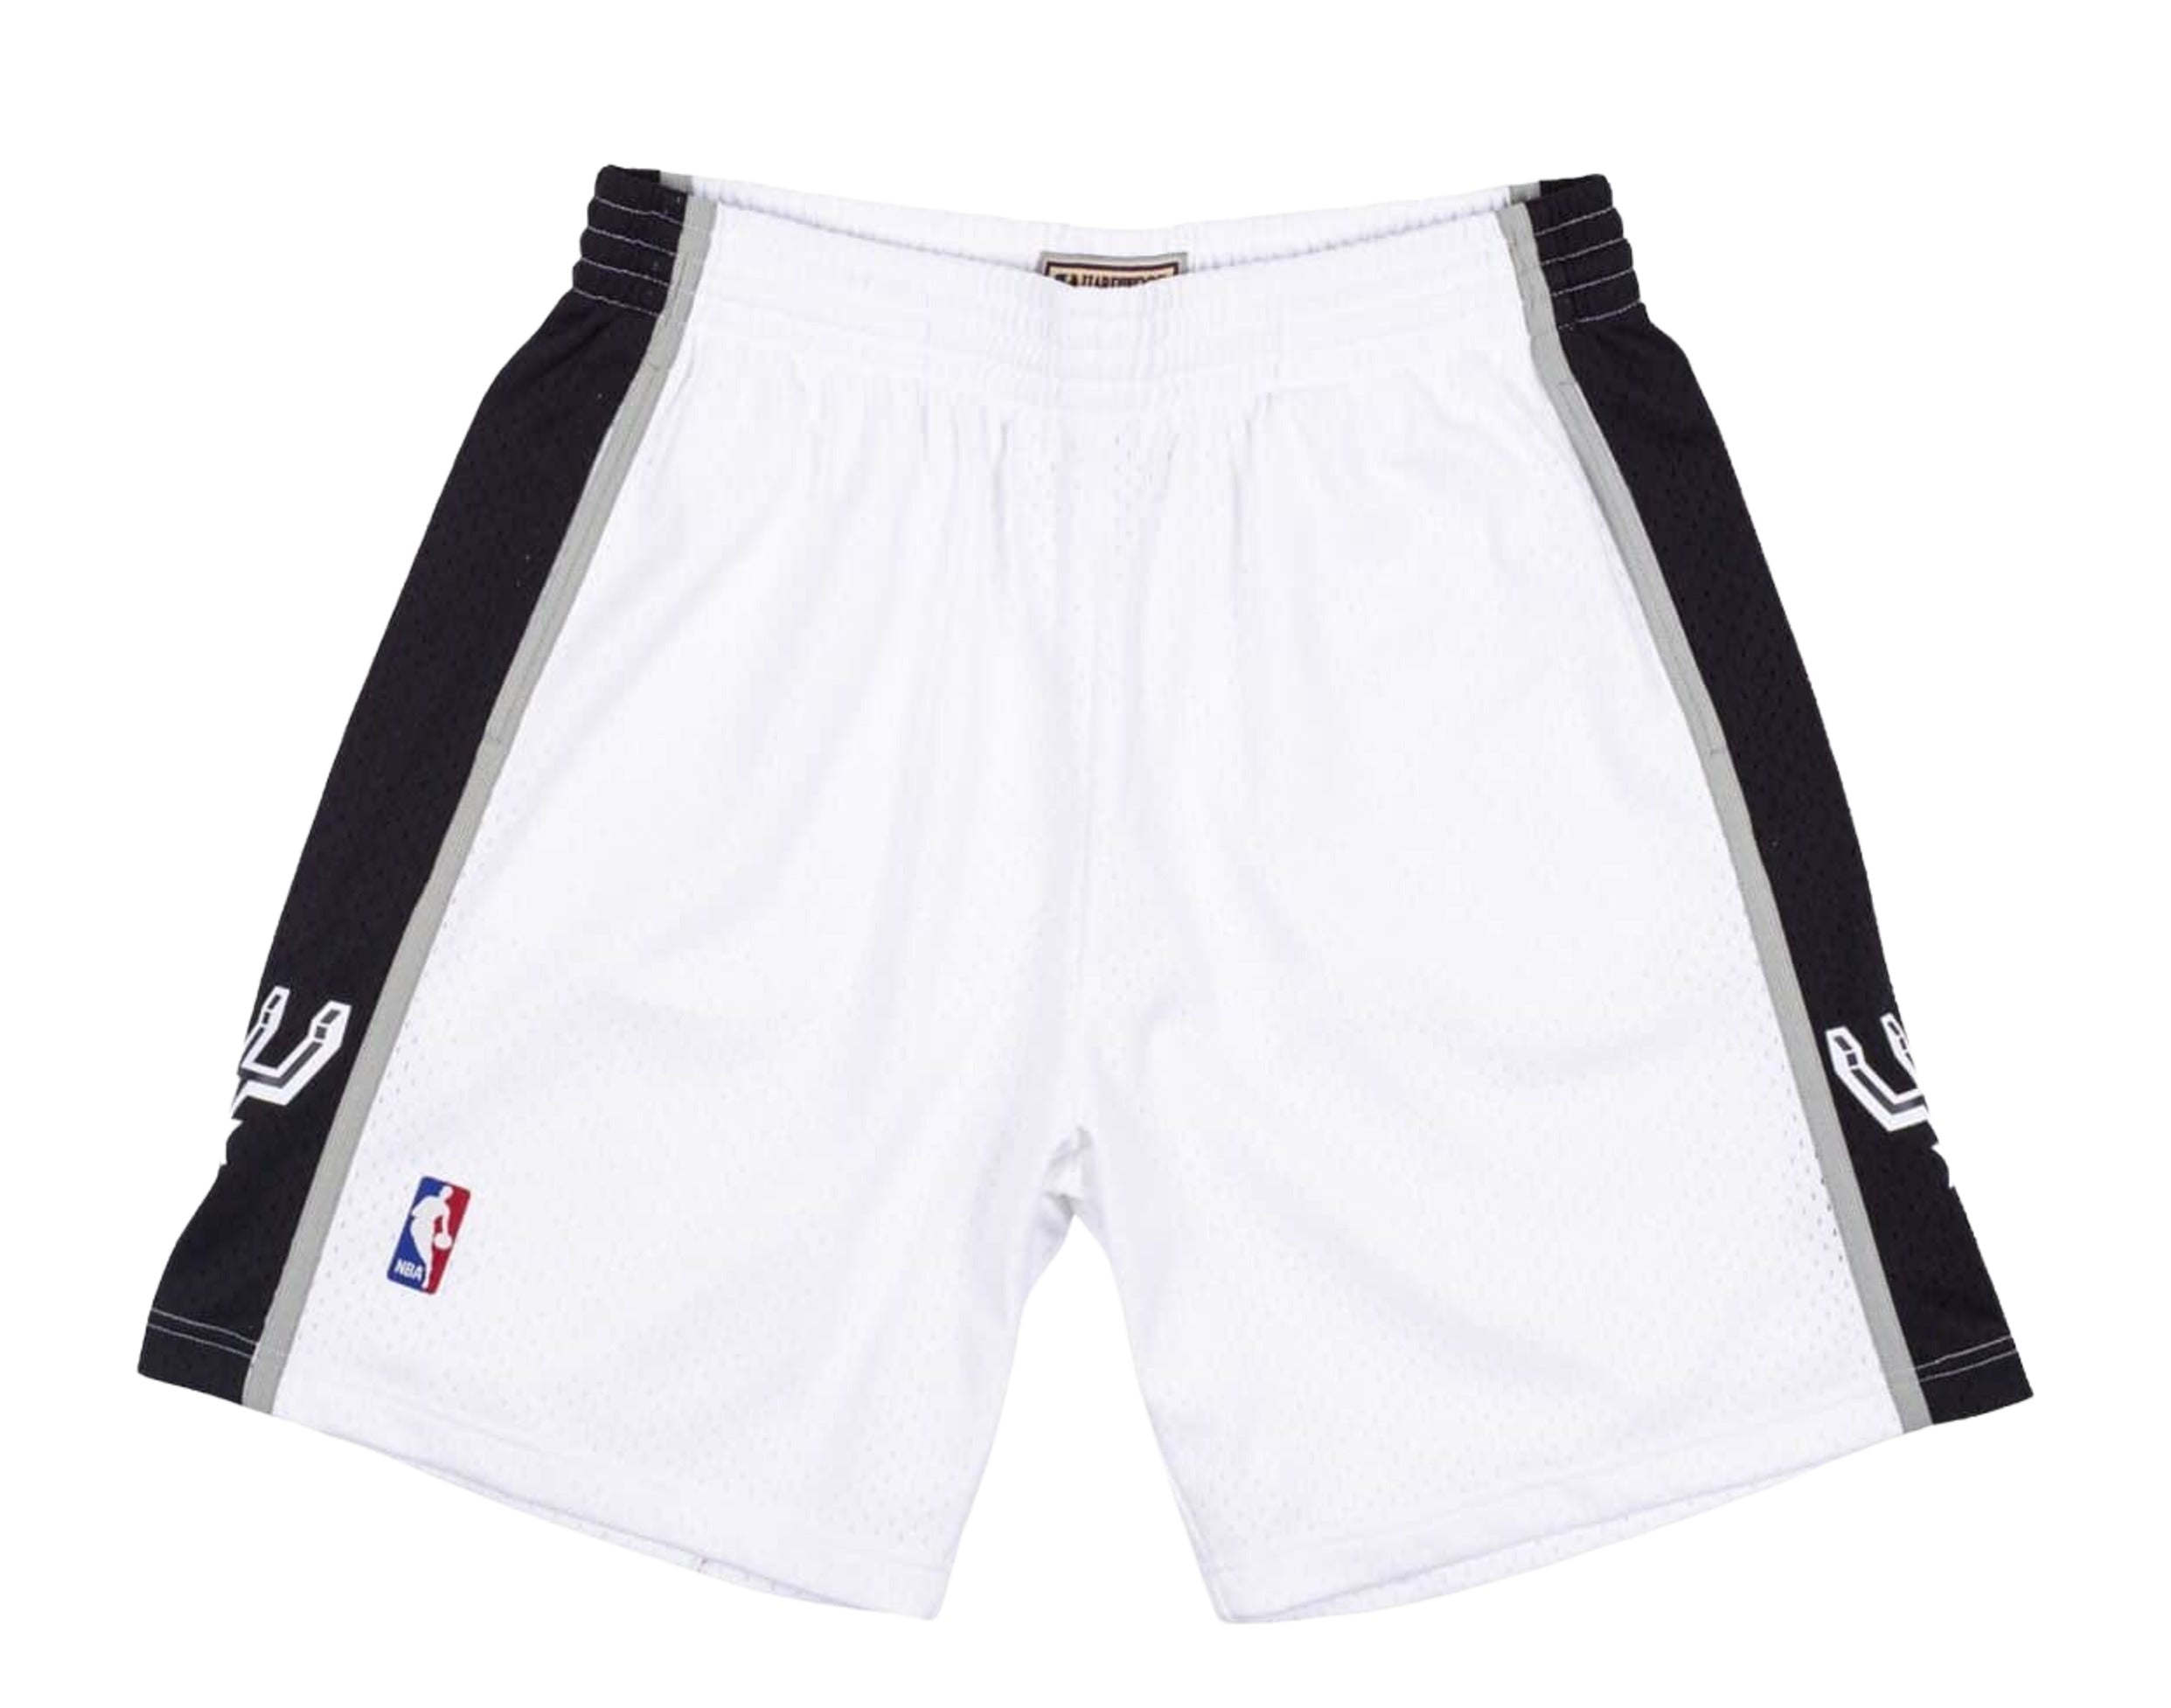 NBA Mitchell Ness Los Angeles Lakers Flames Swingman Adult Basketball Shorts